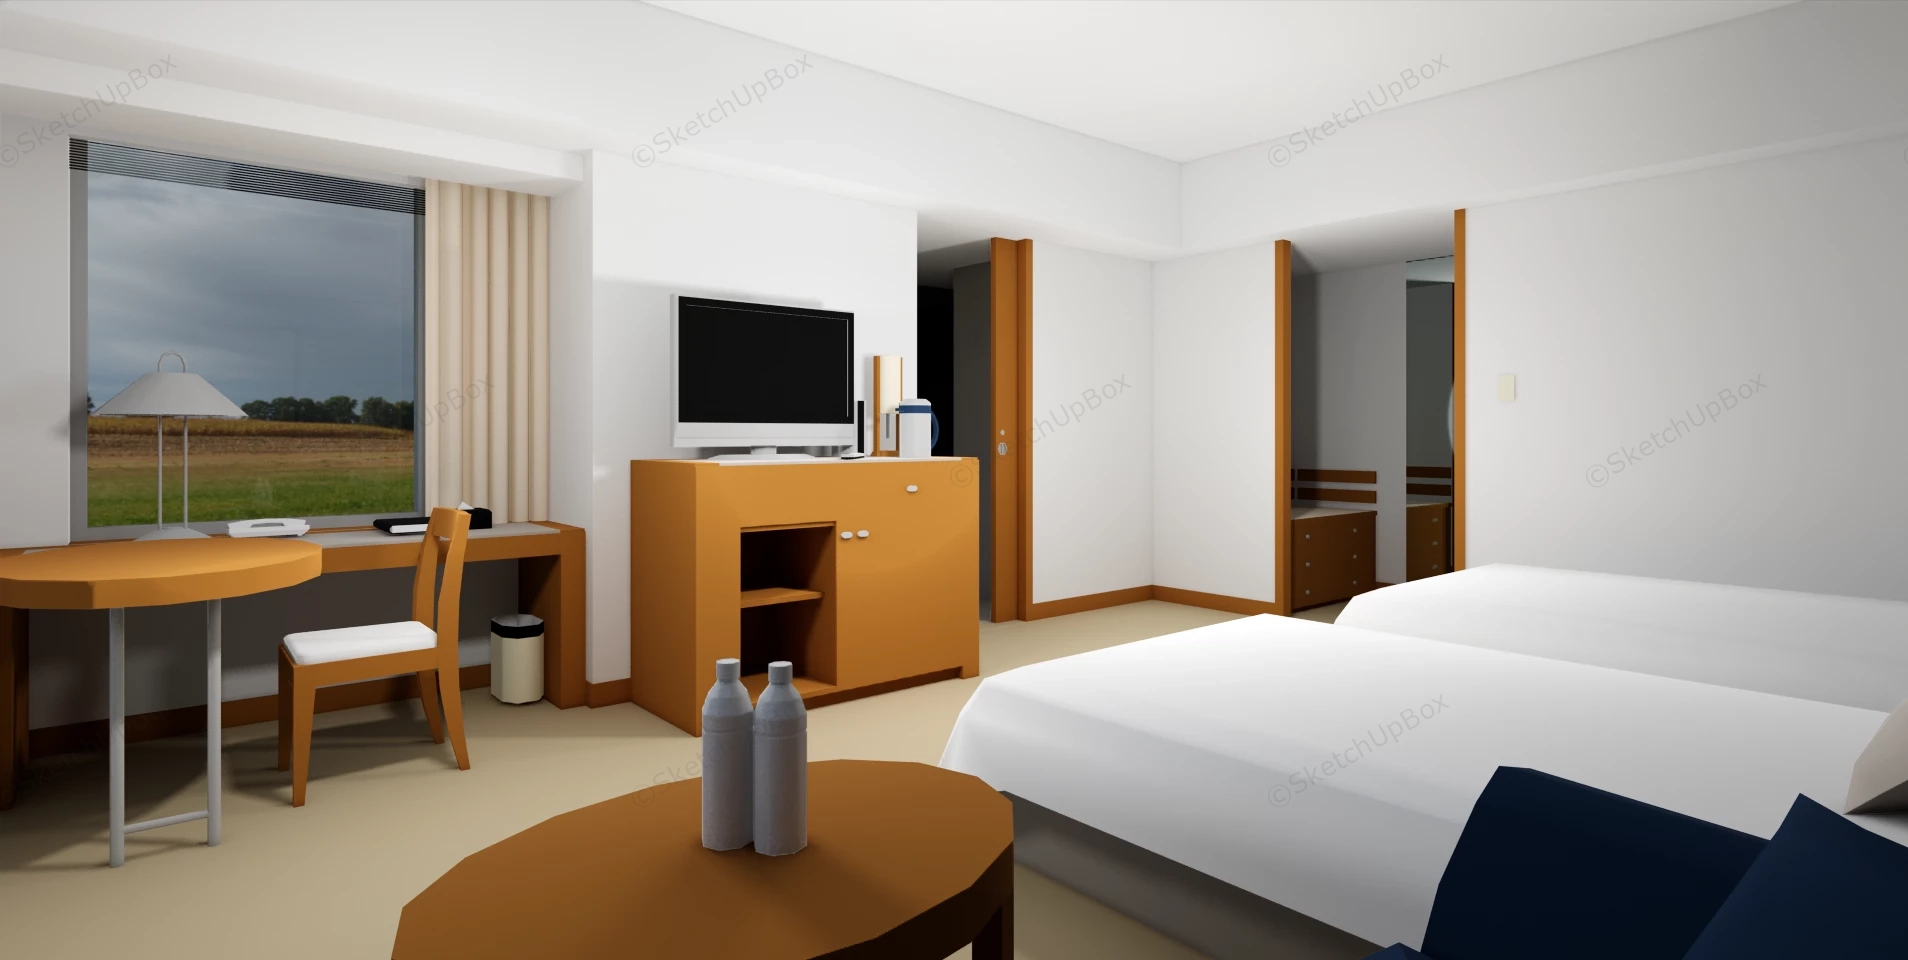 Hotel Twin Room Design sketchup model preview - SketchupBox